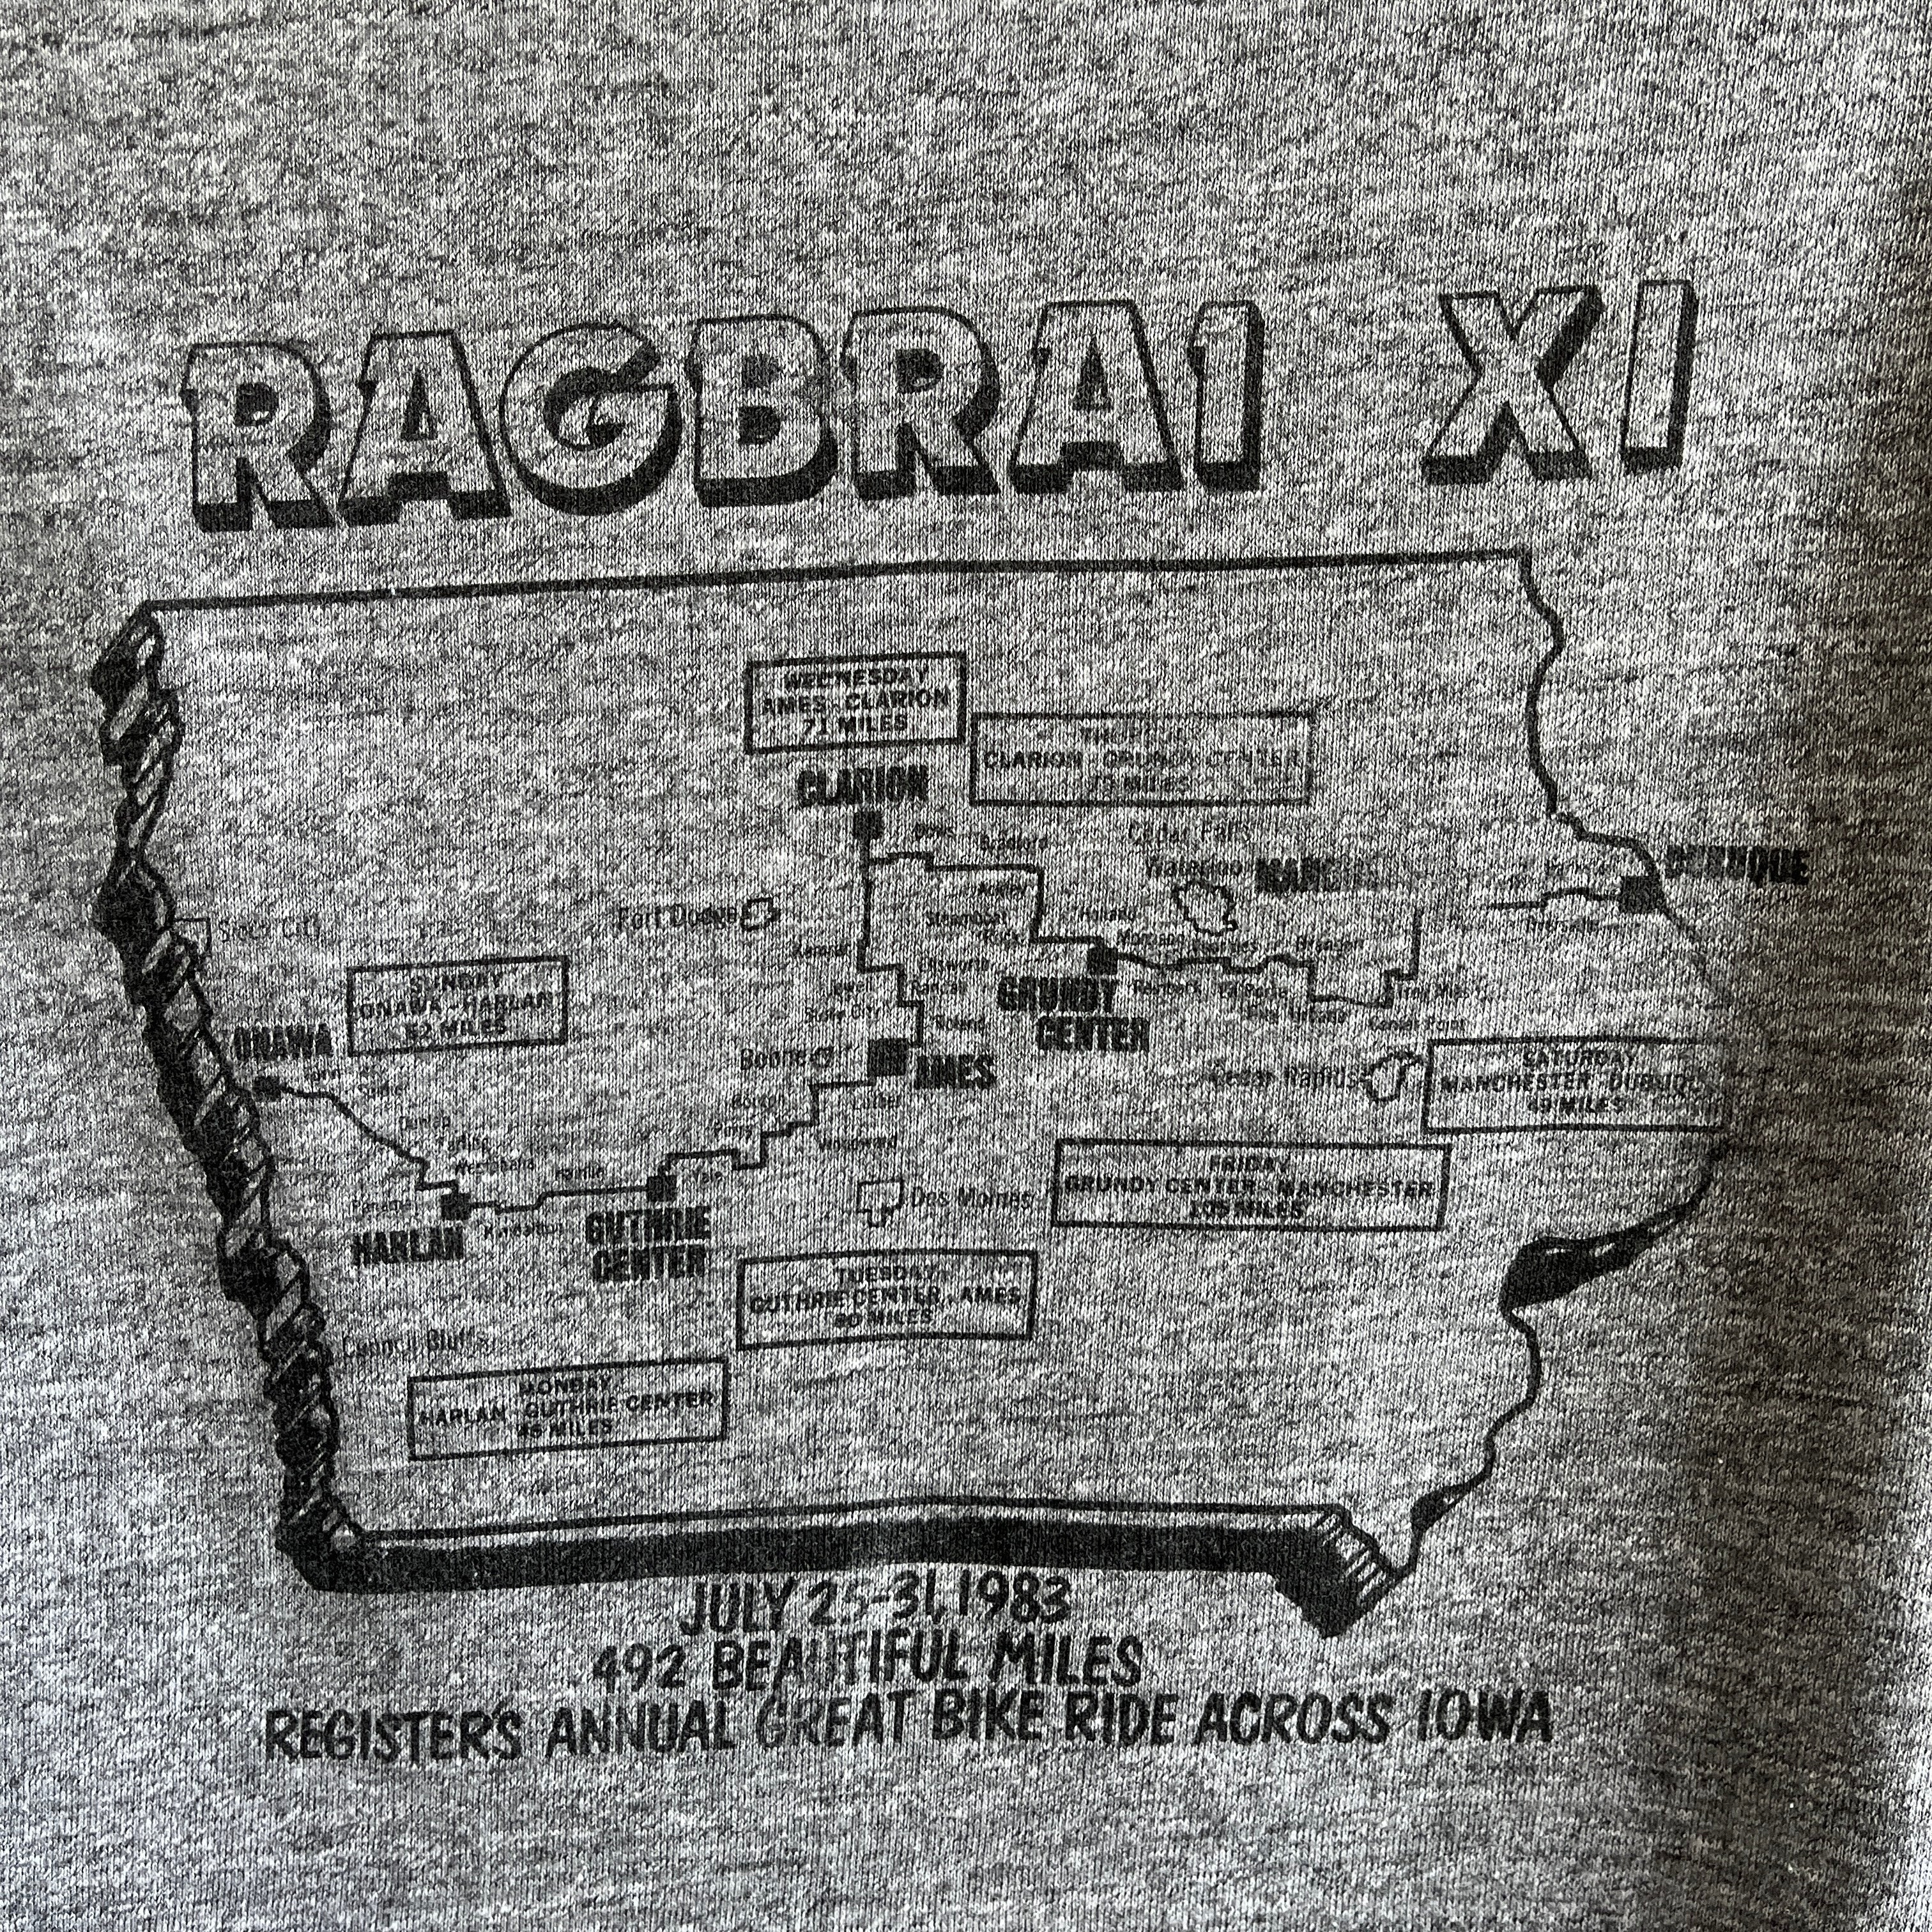 1983 Ragbrai XI 492 Mile Bike Ride in Iowa Ring T-Shirt - Front and Back